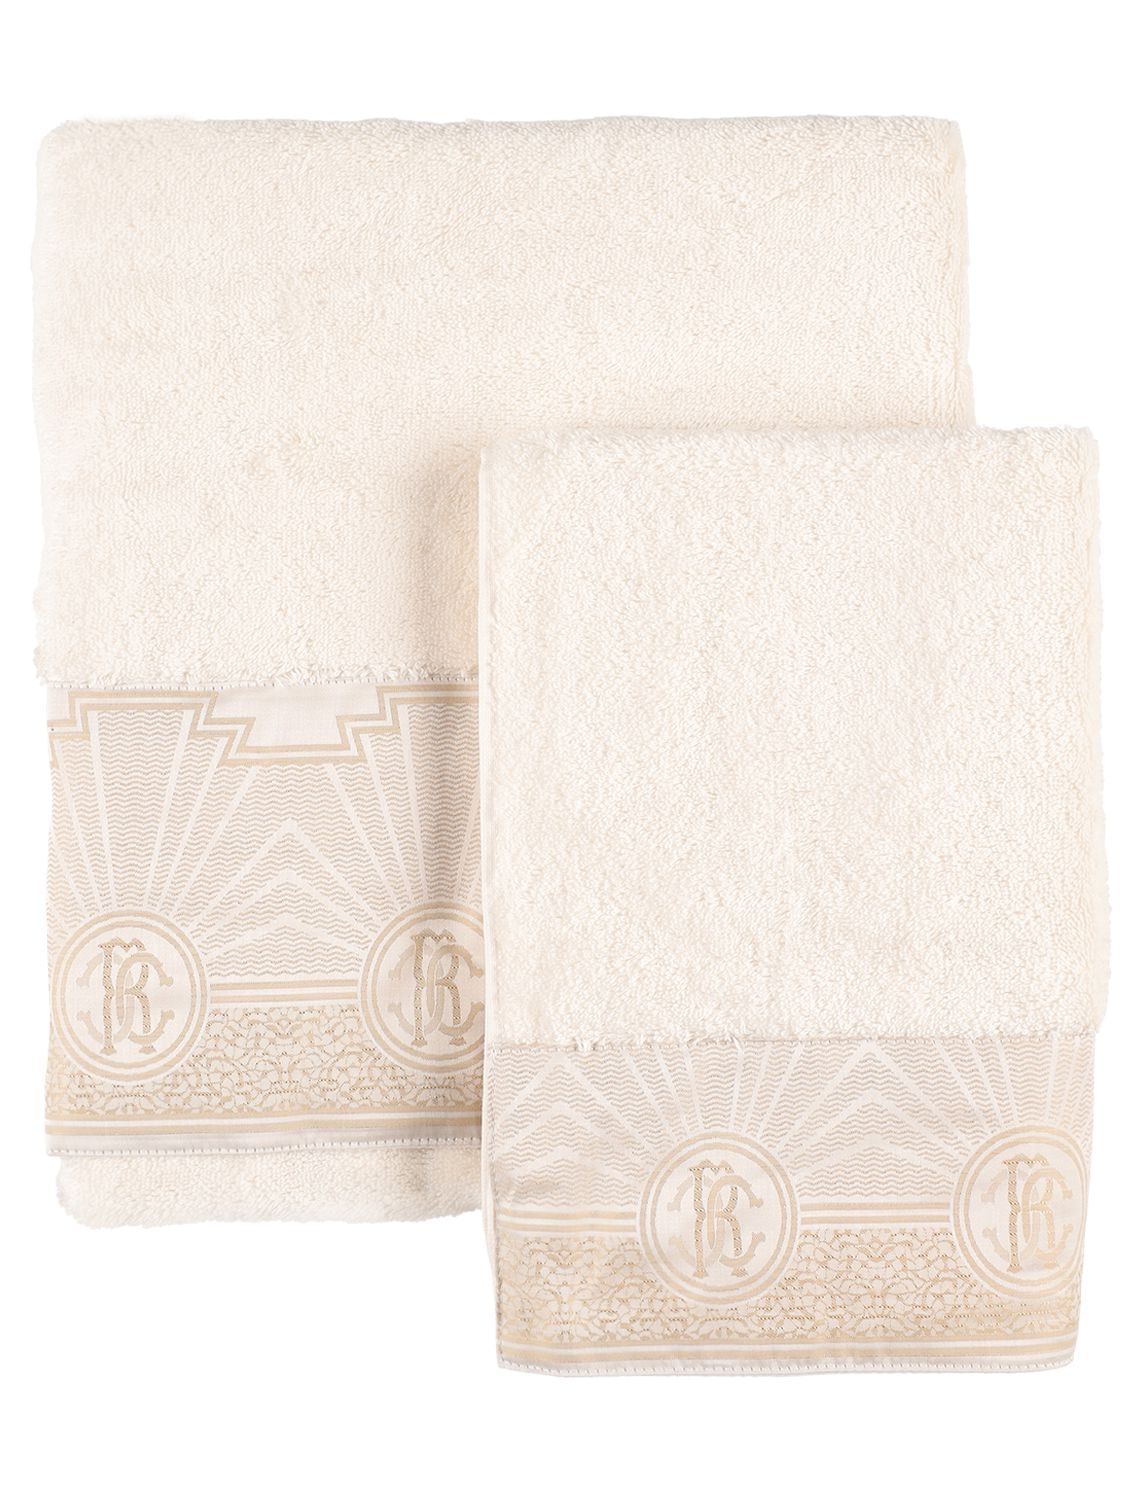 Image of Set Of 2 Royal Gold Towels